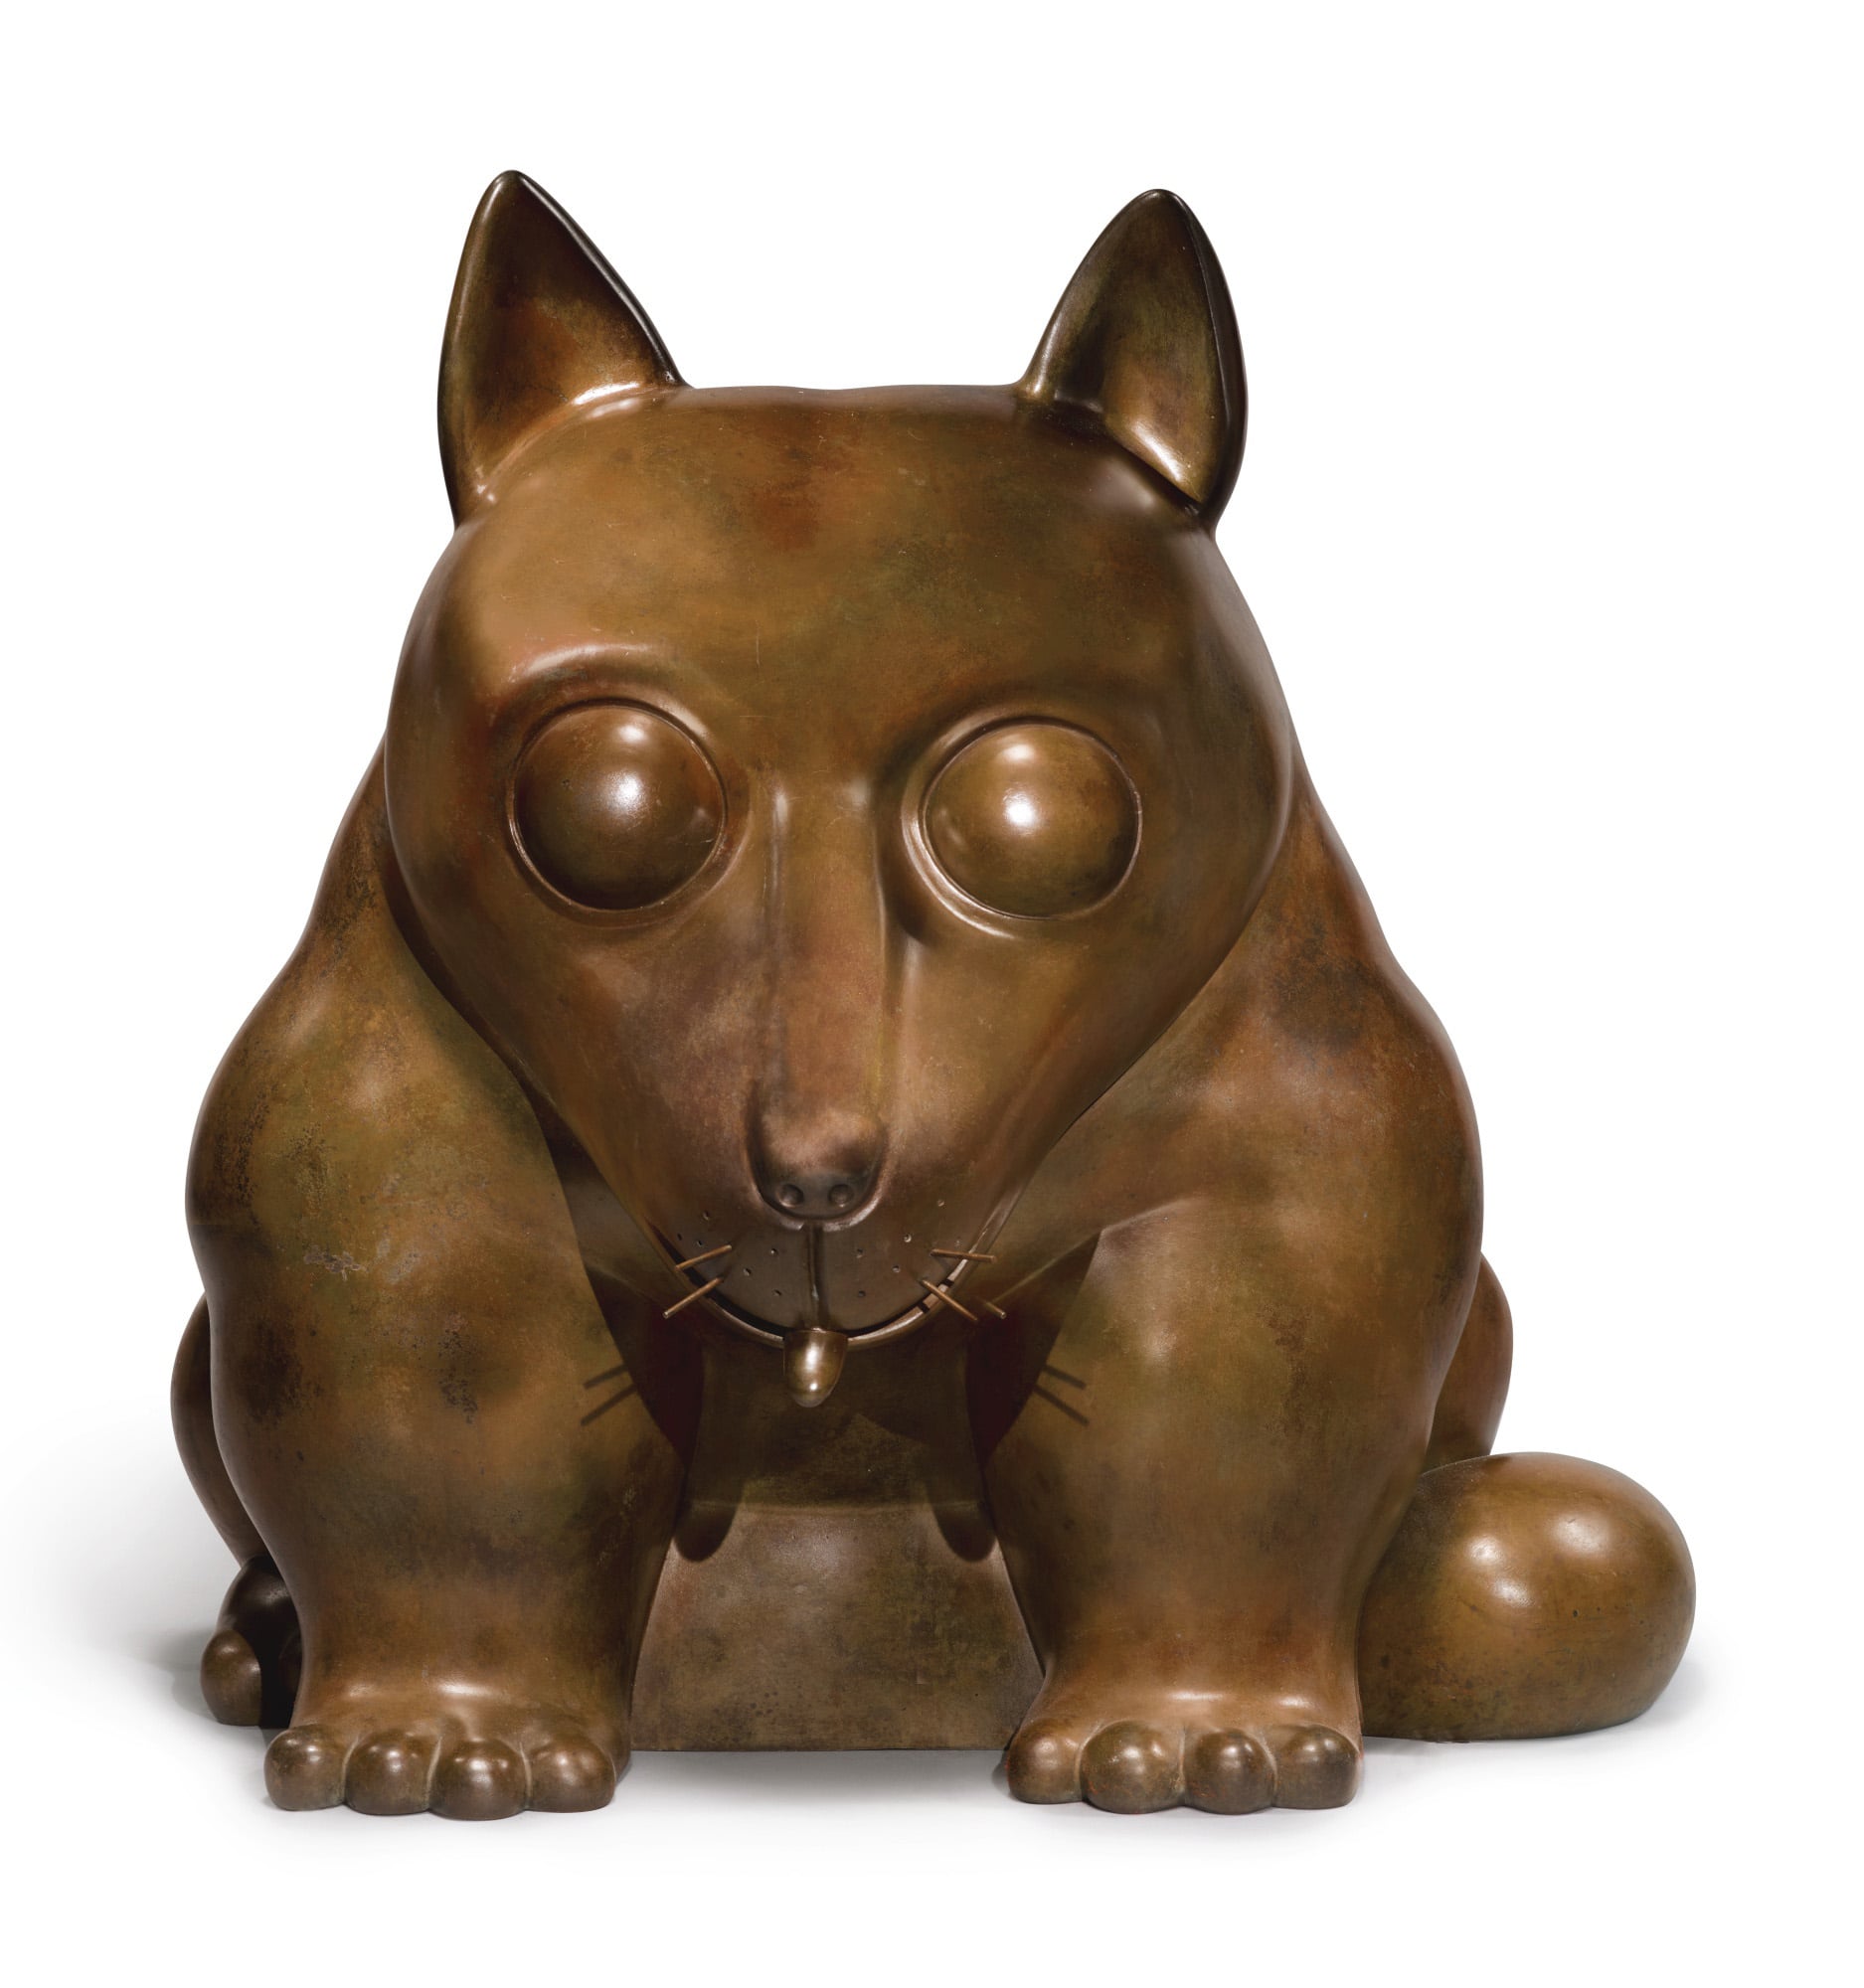 Bronze sculpture of a dog by Fernando Botero